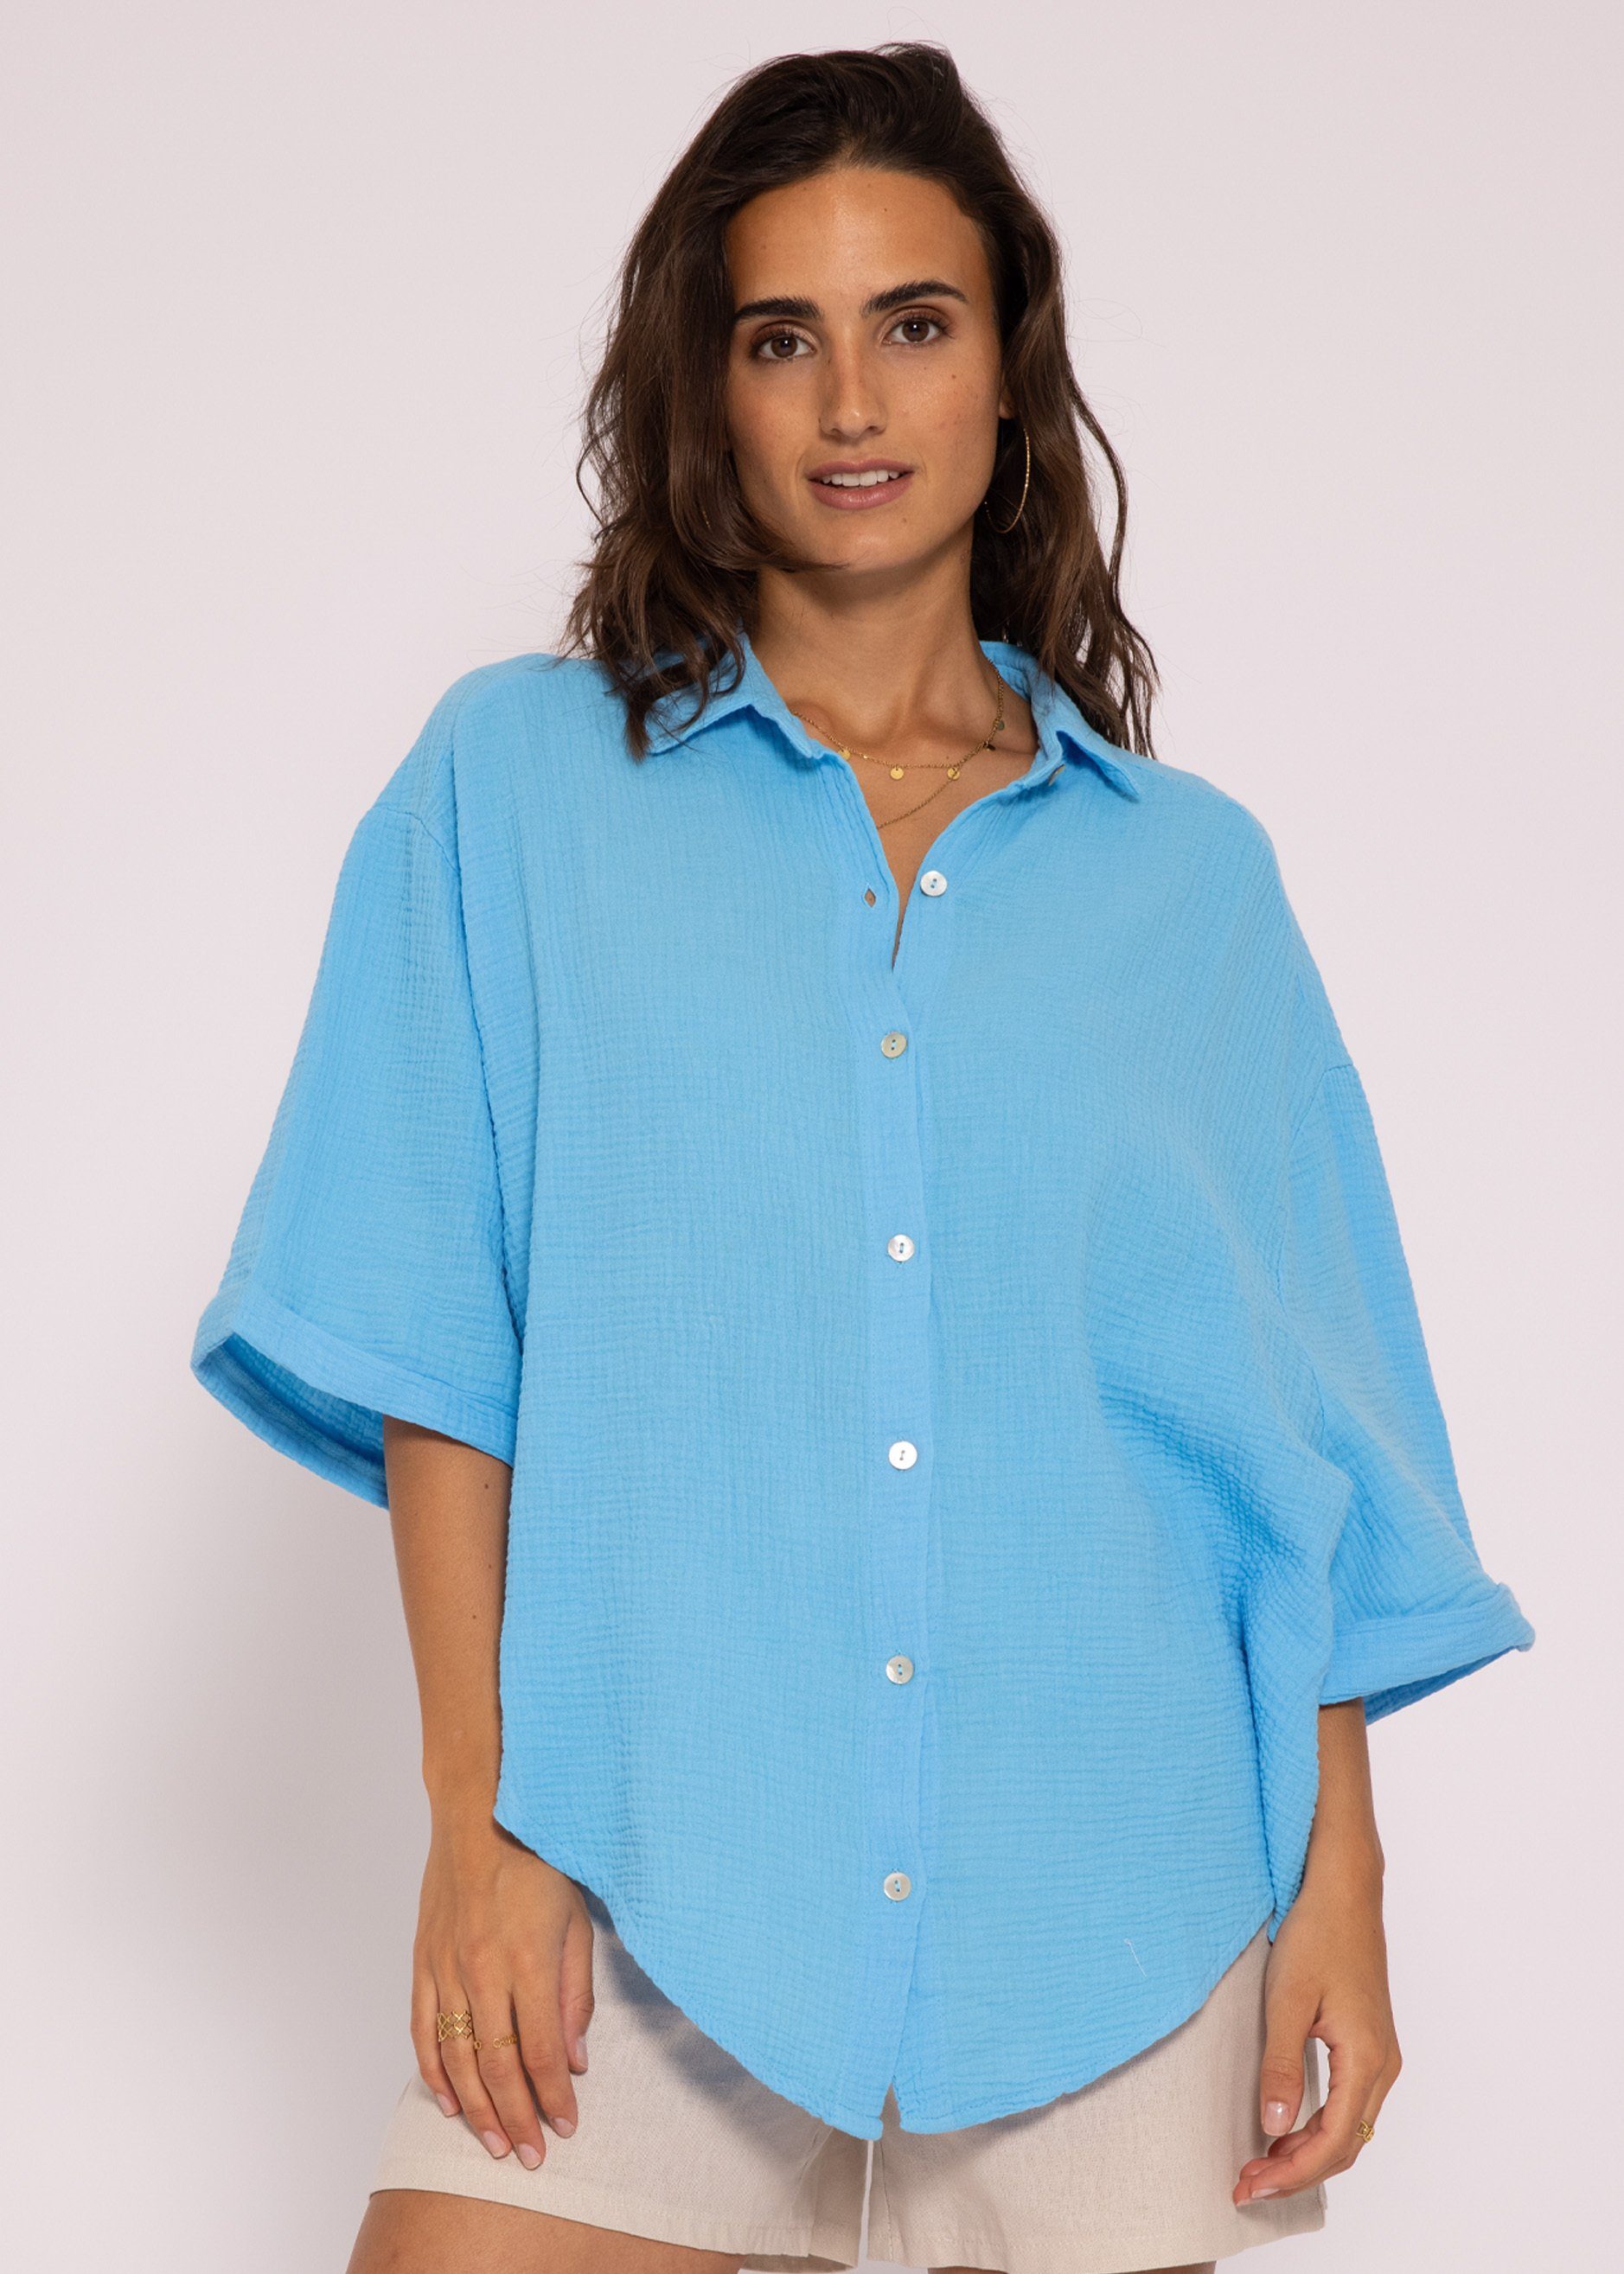 SASSYCLASSY Kurzarmbluse Oversize Musselin Bluse Damen kurzarm Shirt Bluse aus Musselin Baumwolle, Made in Italy, One Size: Gr. 36-48 Azurblau